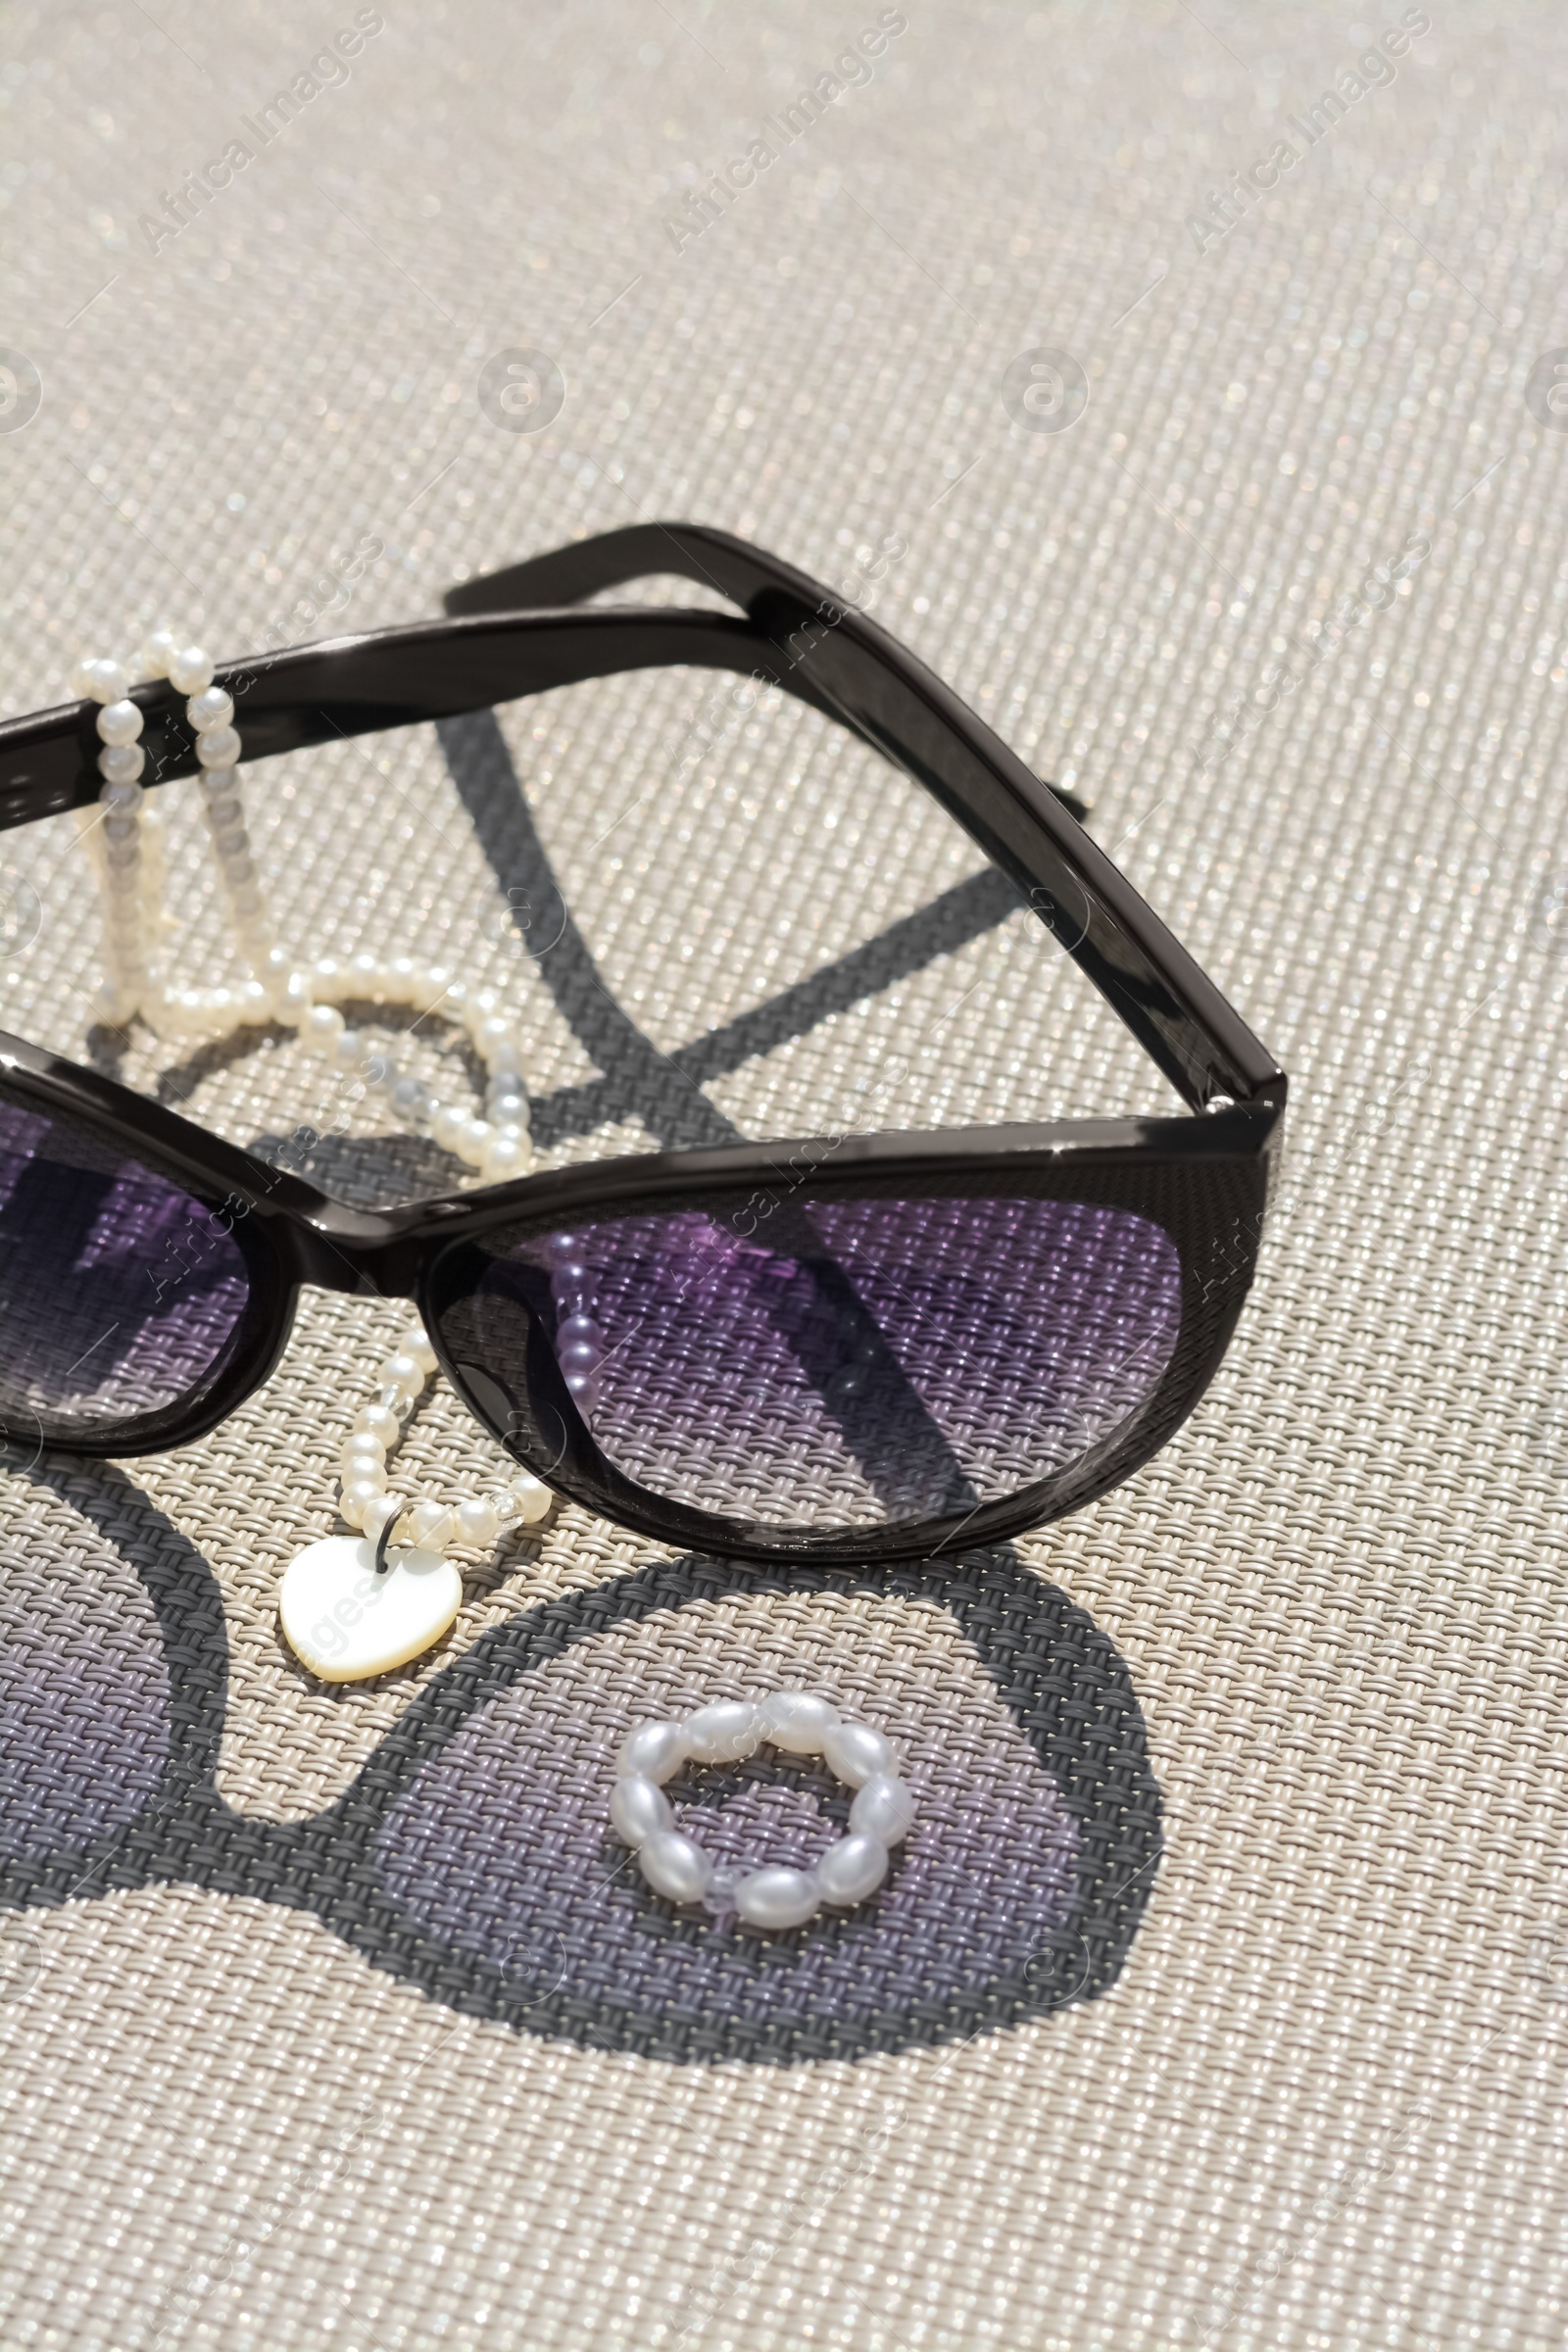 Photo of Stylish sunglasses and jewelry on grey surface, closeup